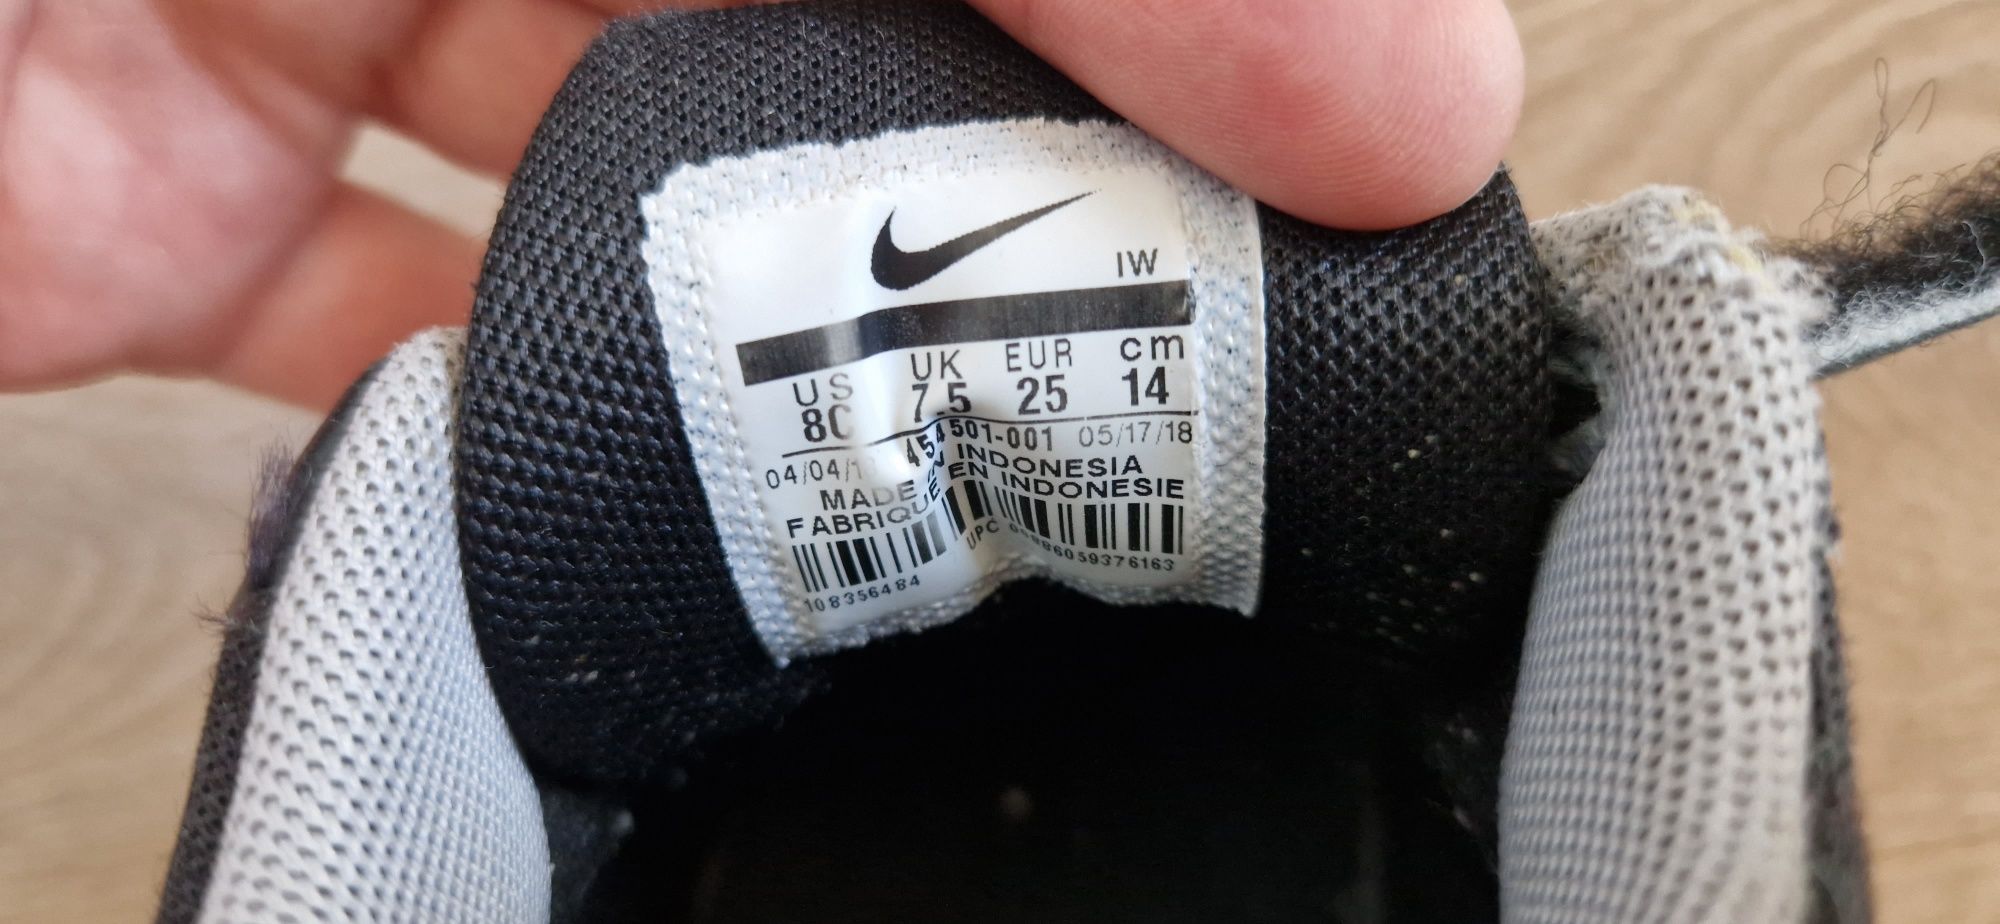 Adidaski Nike 14 cm